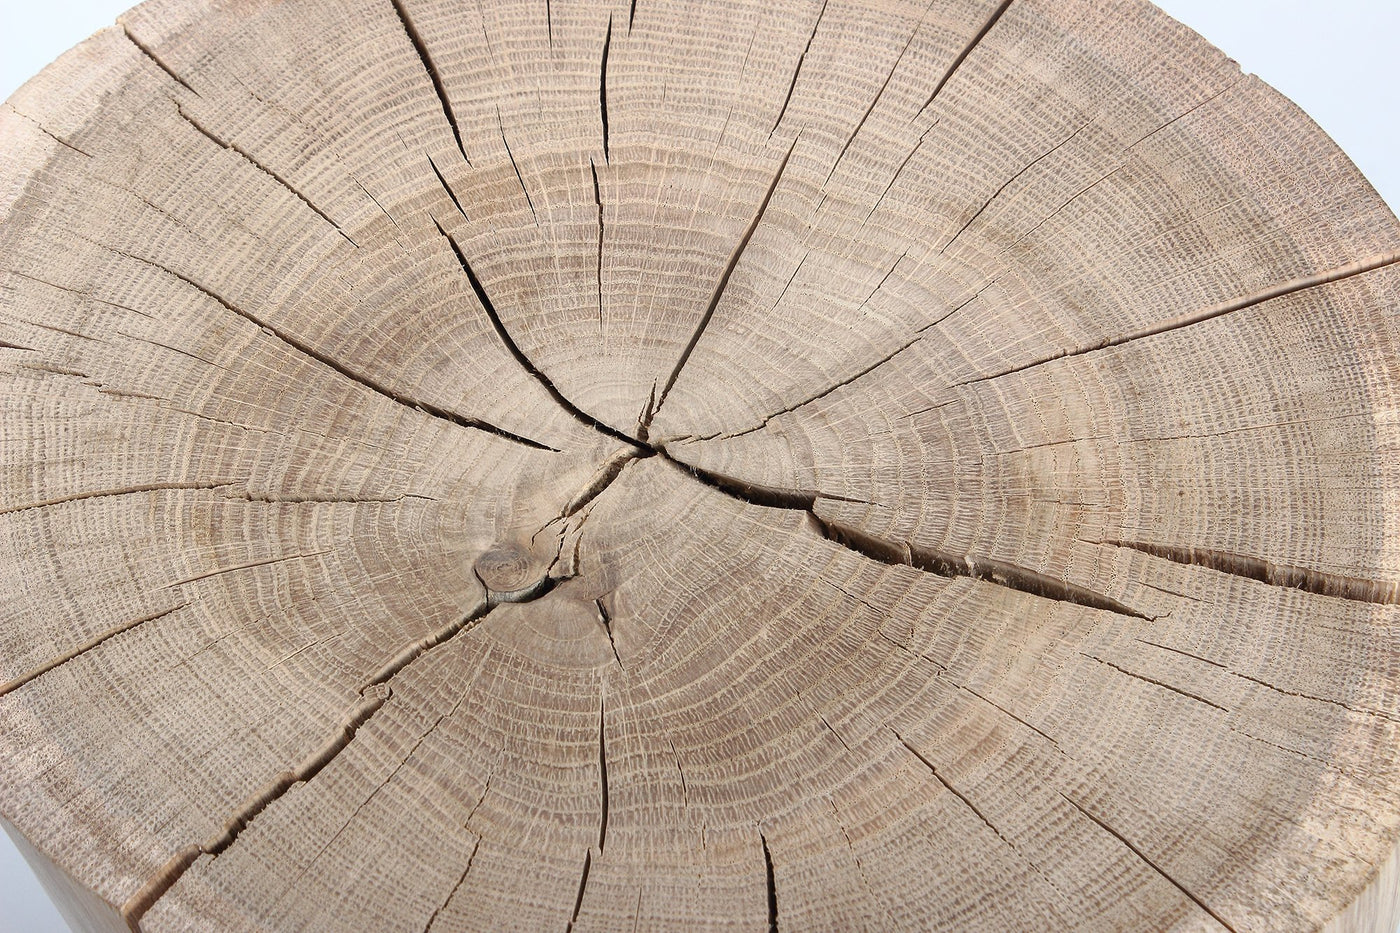 Medui Oak Log Stool-Furnishings-STOOLS, SUSTAINABLE DECOR, TABLES-Forest Homes-Nature inspired decor-Nature decor